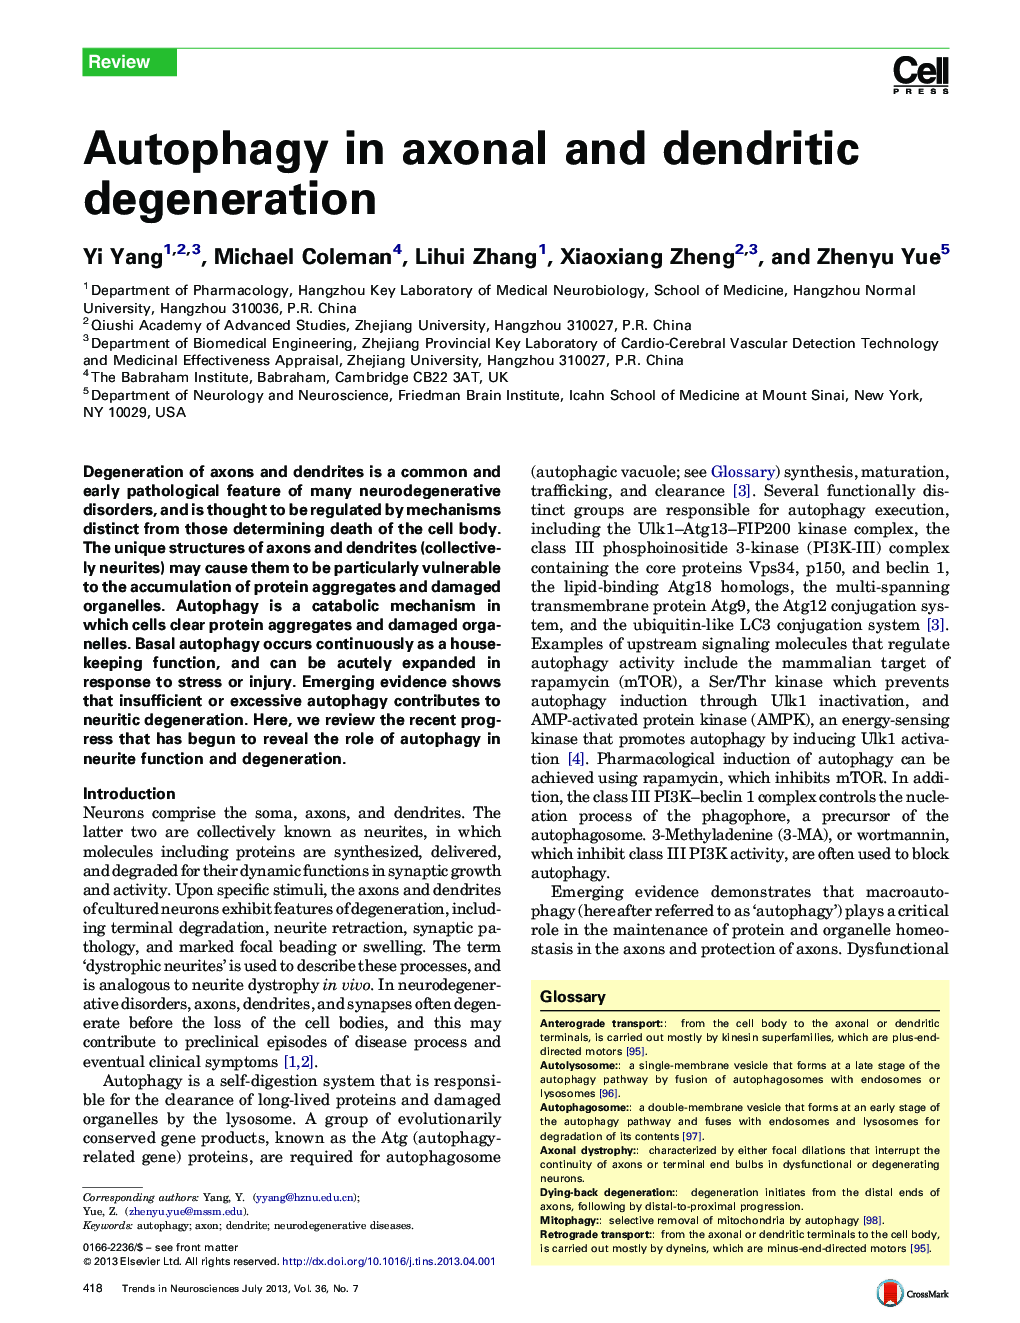 Autophagy in axonal and dendritic degeneration